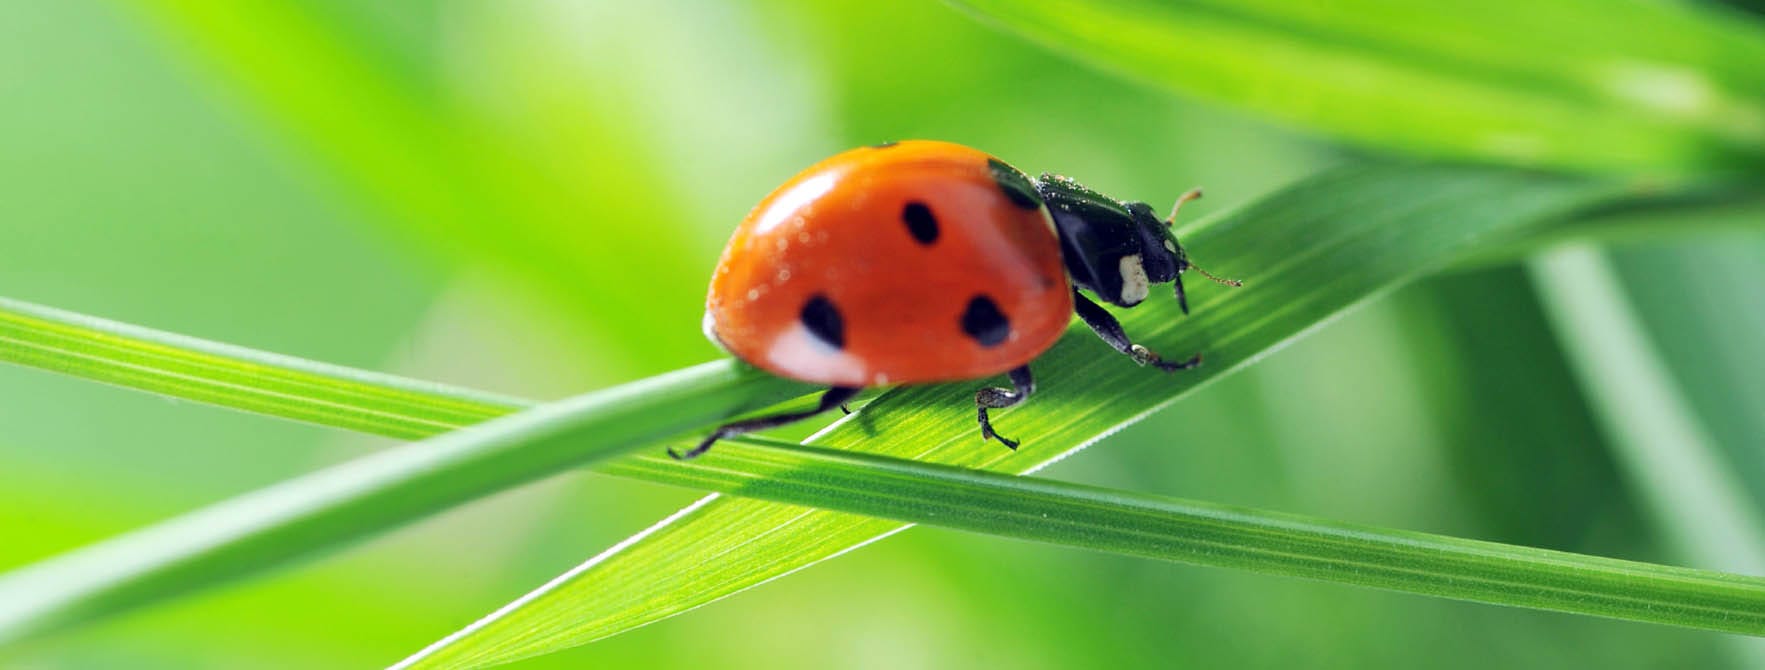 Ladybug Benefits | All About Lady Bugs